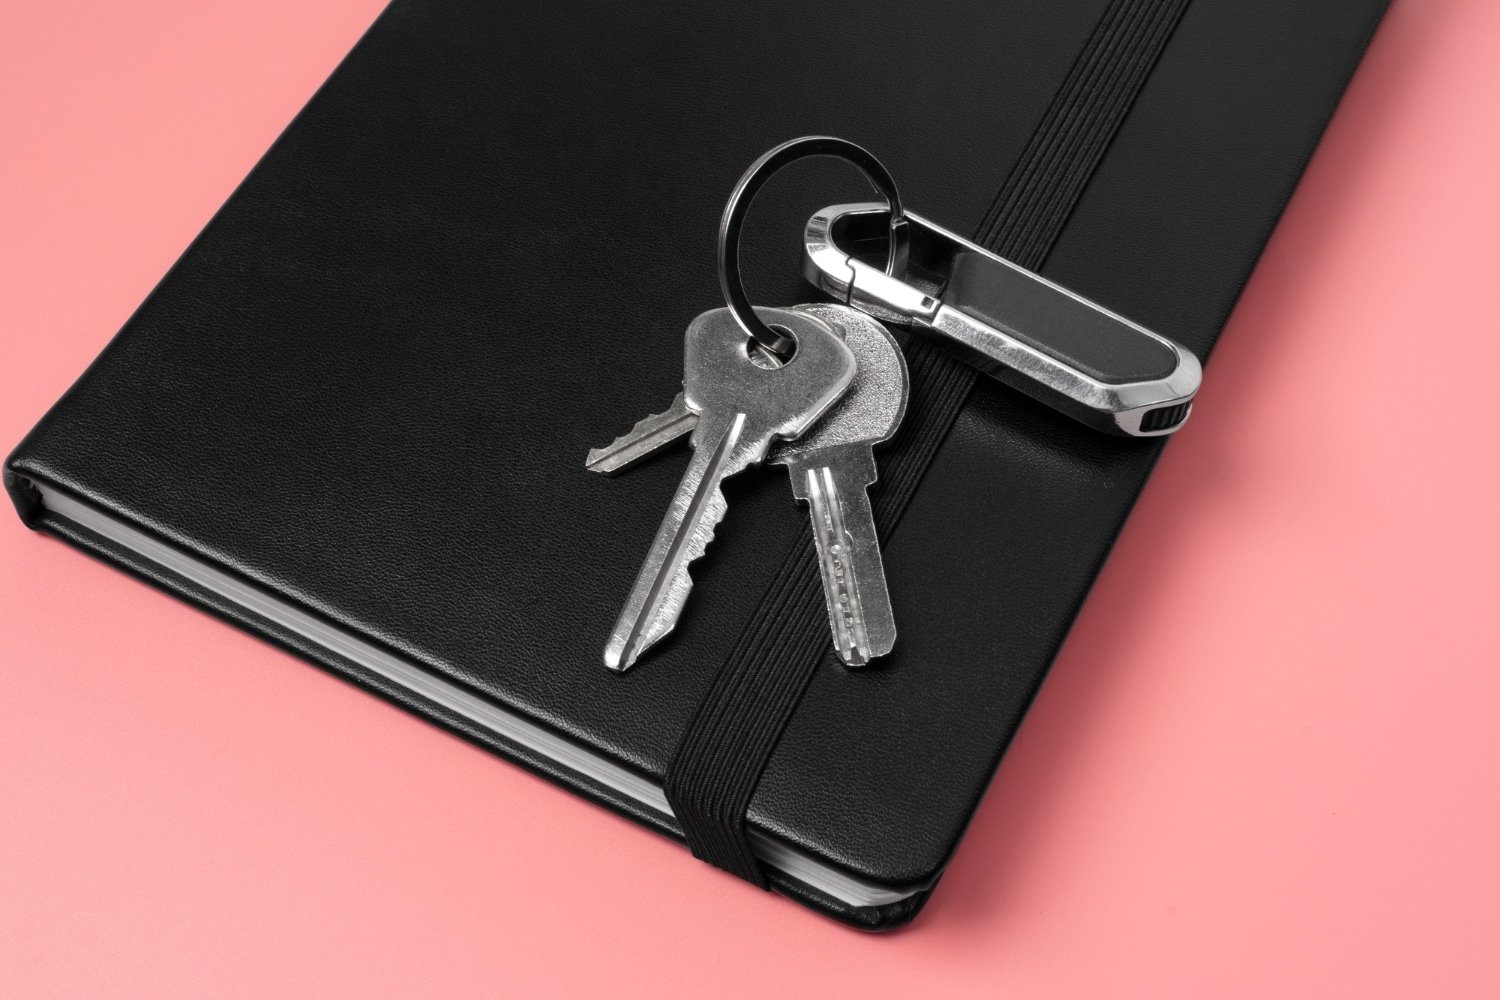 Organize Your Keys With KeySmart’s Compact Key Holders